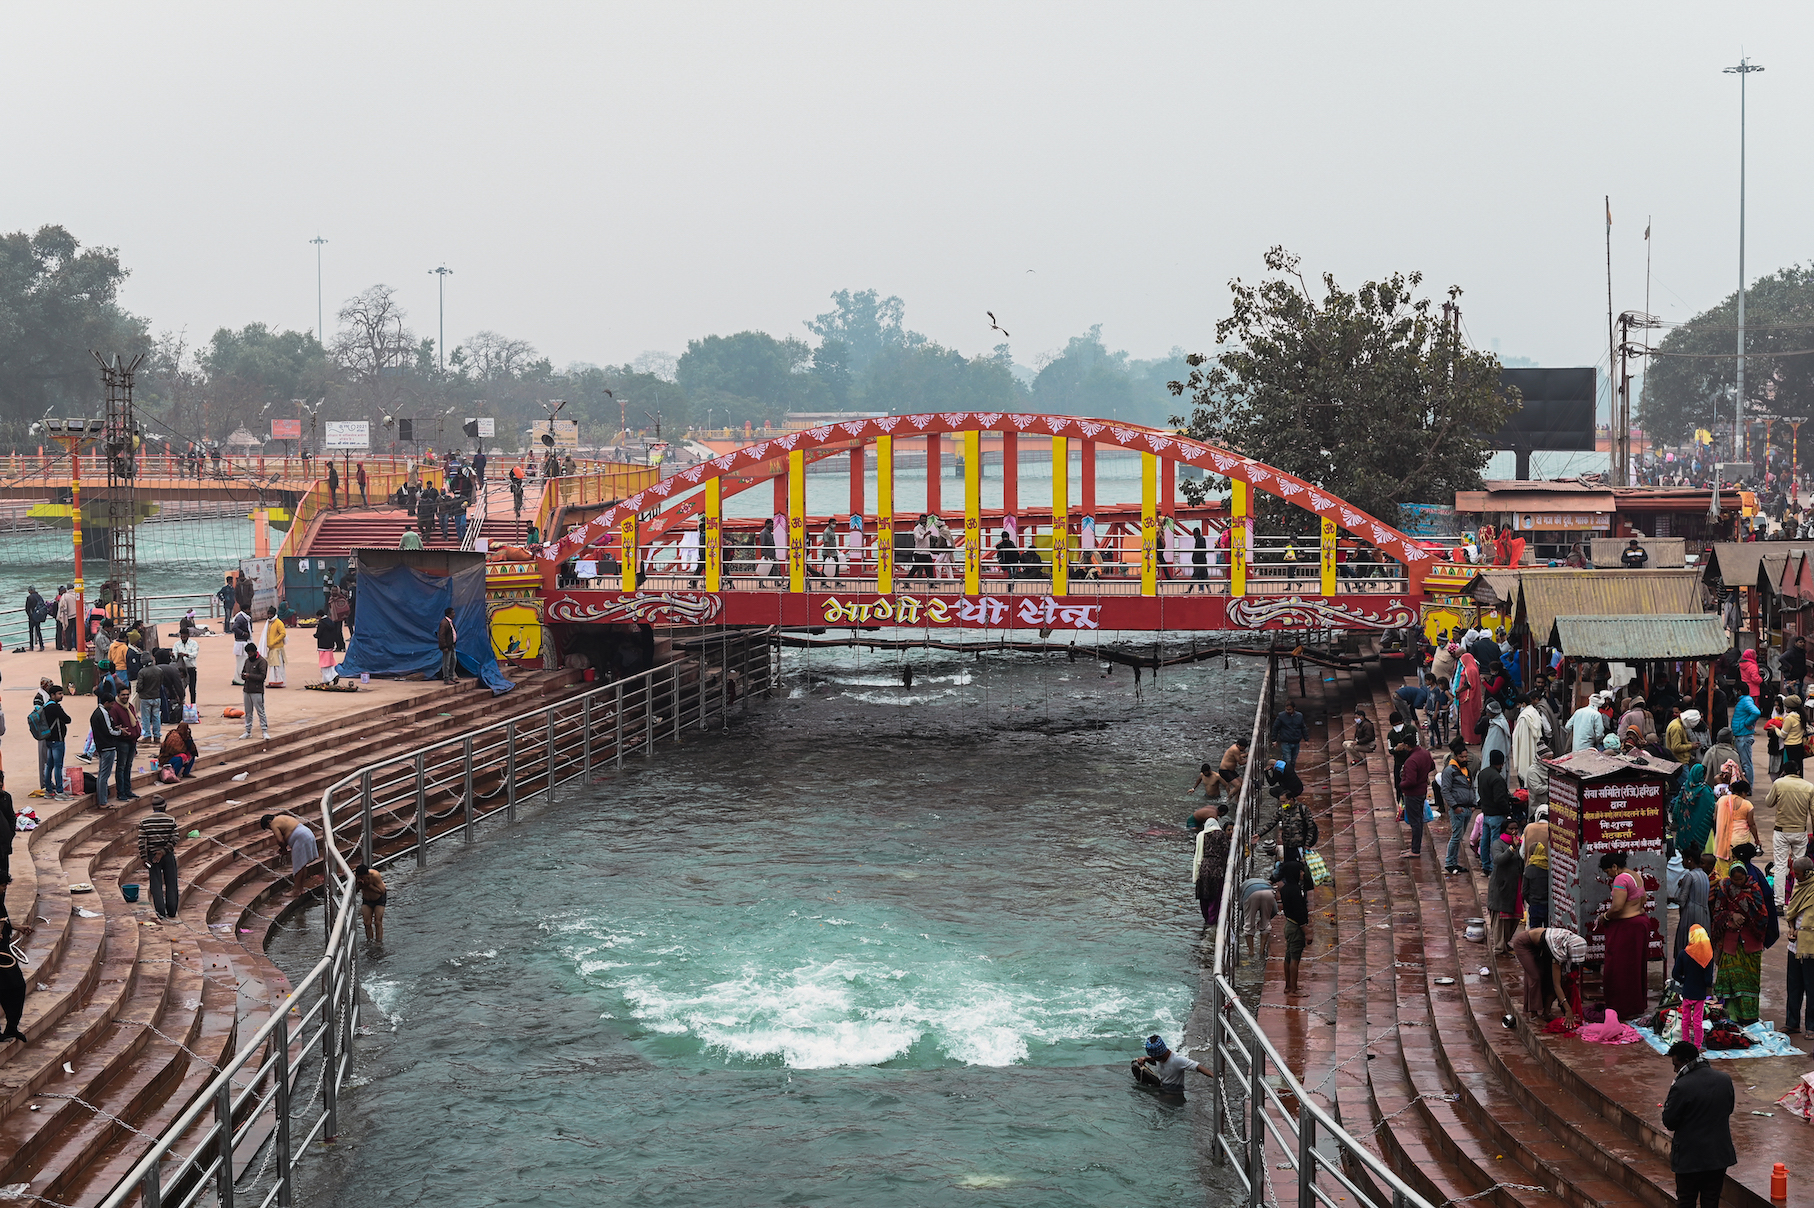 hindu religious festival kumbh mela being celebrated in haridwar